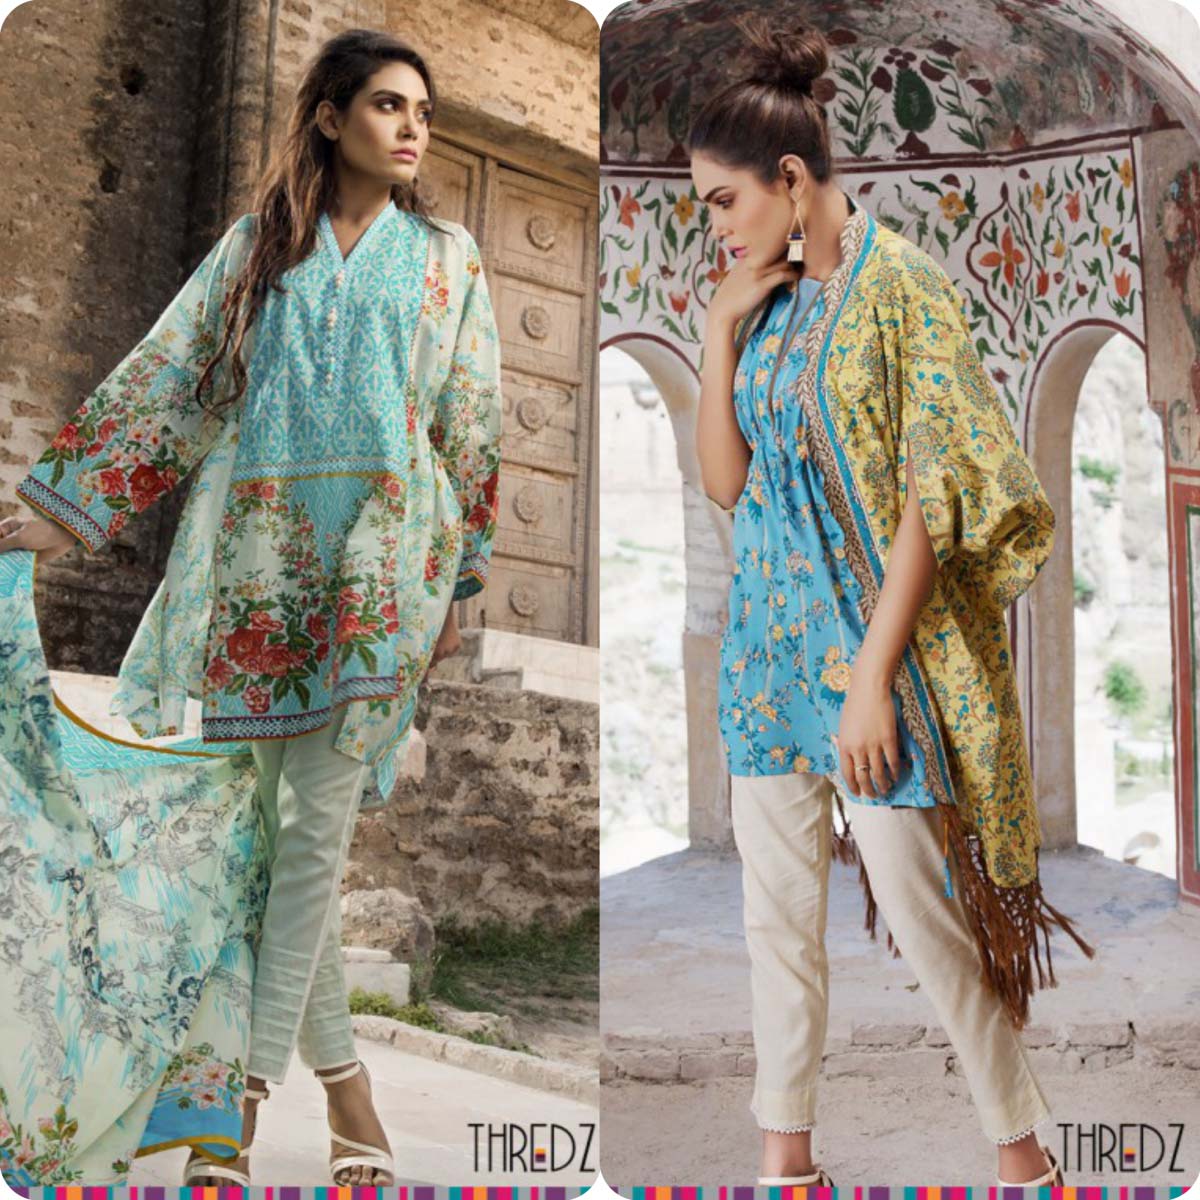 Stylish Embroidered Eid KurtisTunics for Girls By THREDZ 2016-2016 Complete Look-Book (8)